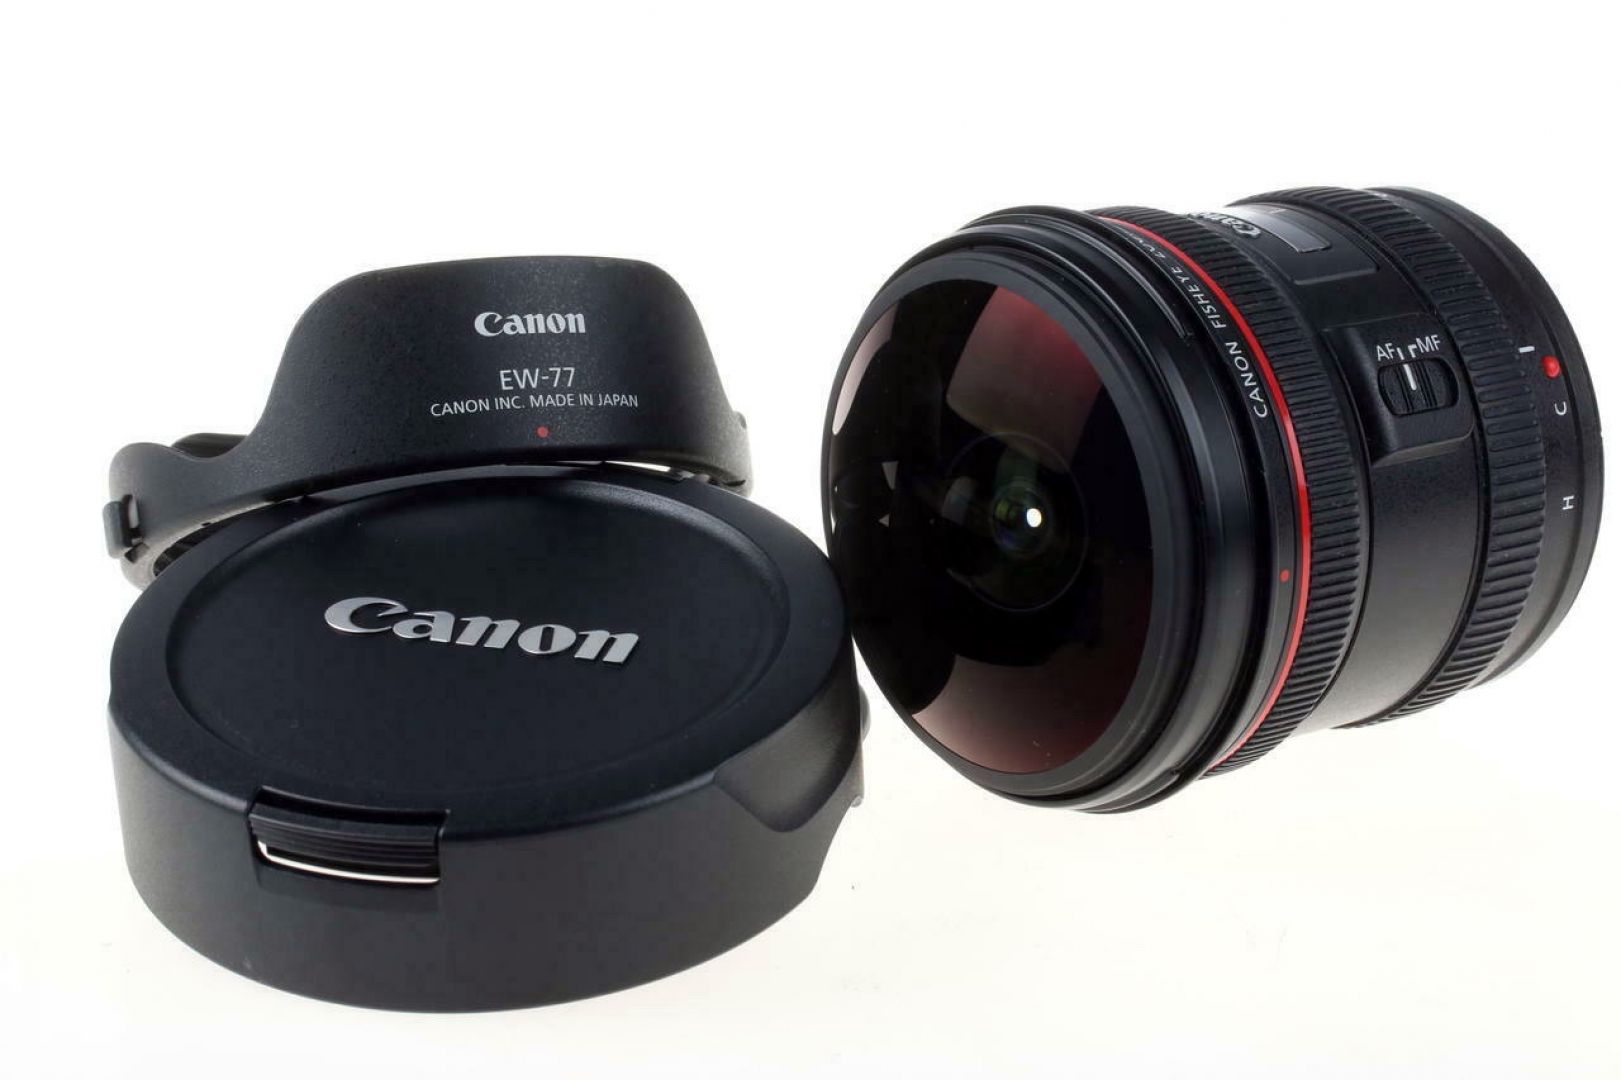 Canon 8-15mm f/4.0L EF USM Fisheye